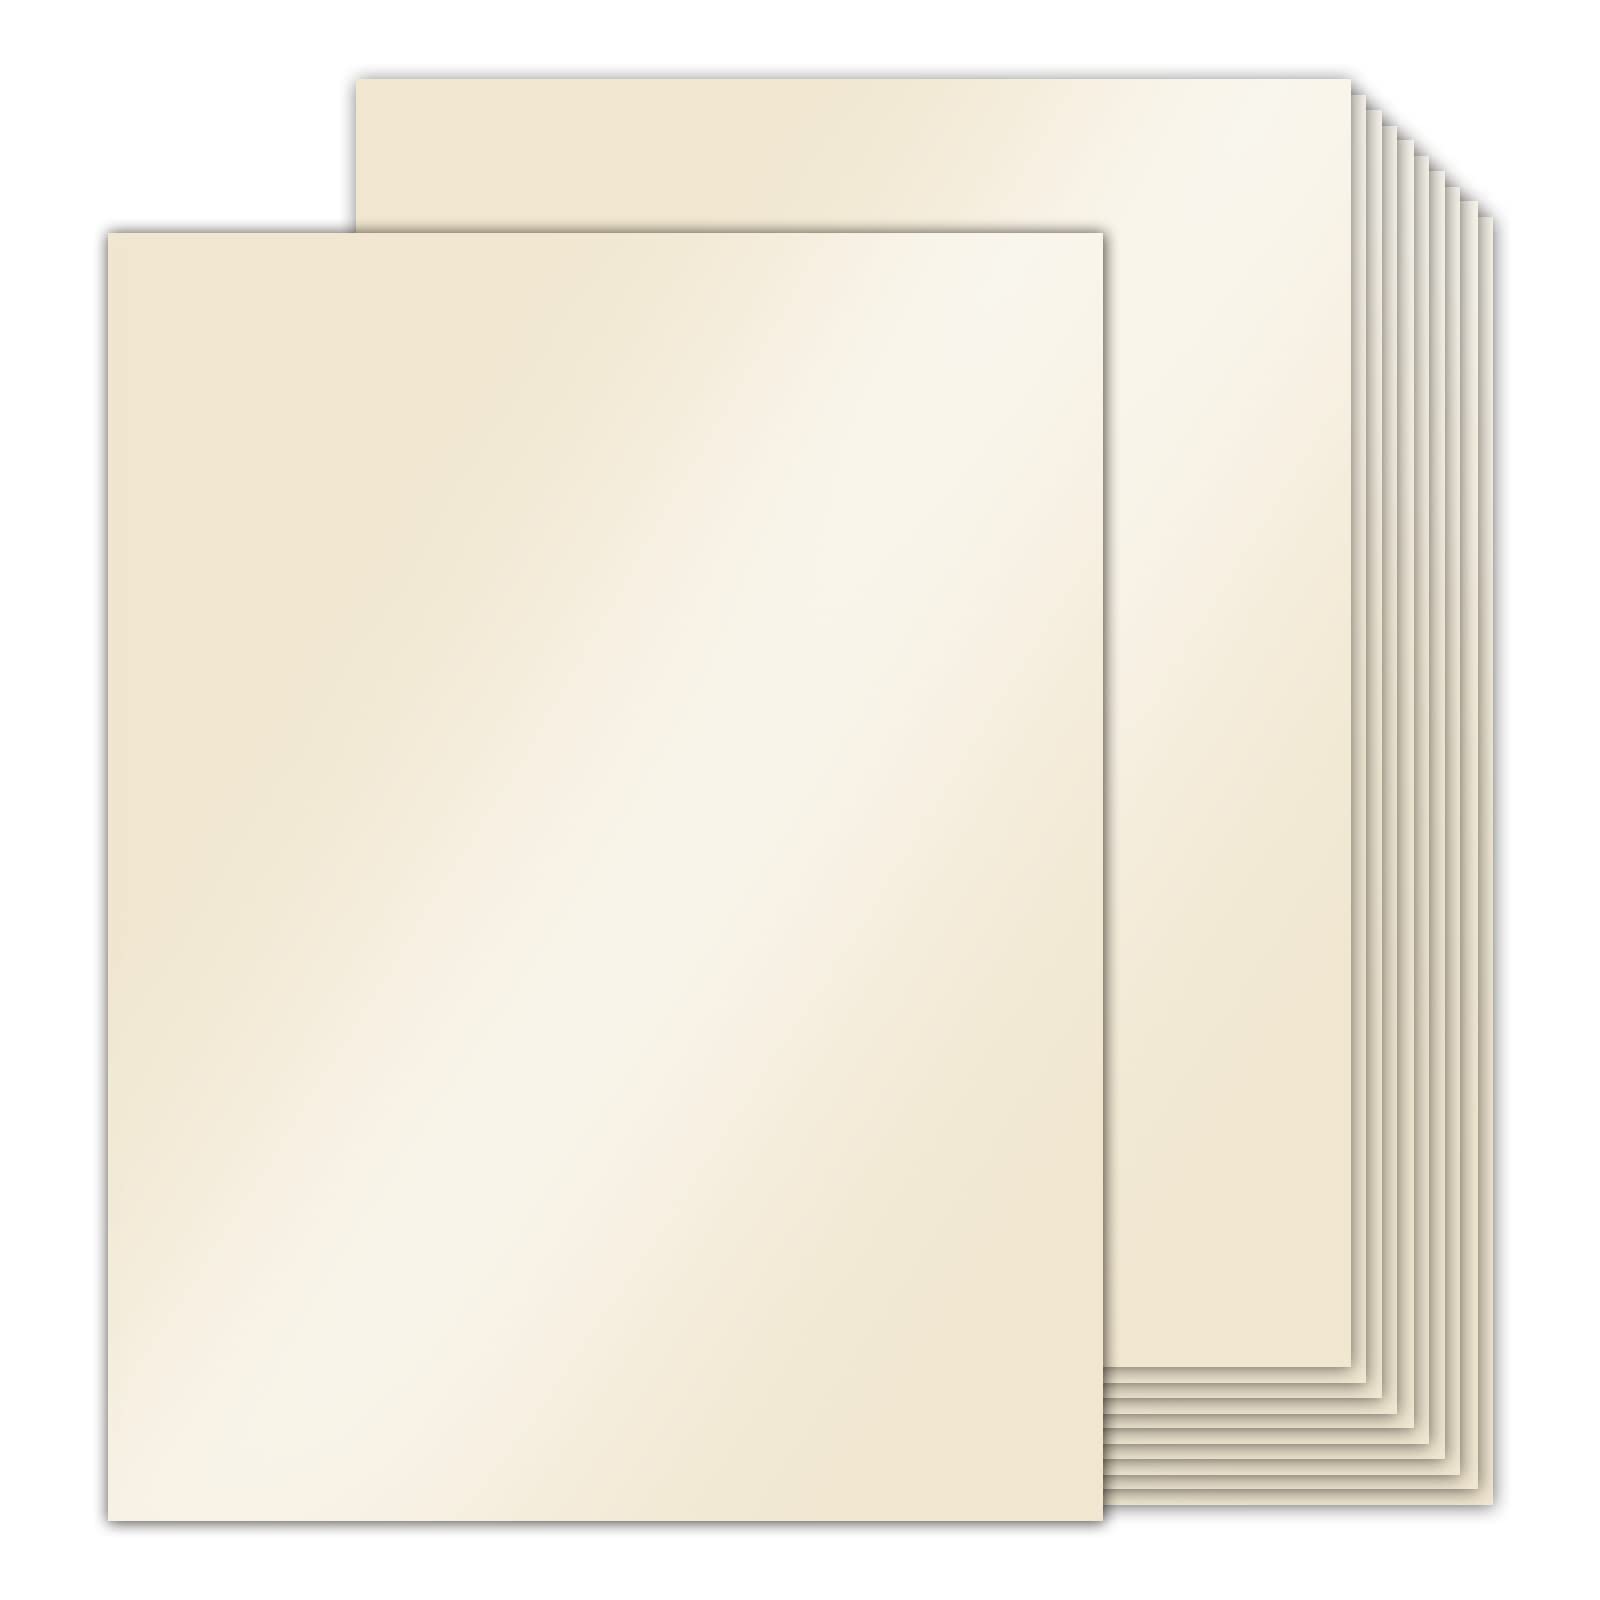 100 Sheets Cream Shimmer Cardstock 8.5 x 11 Metallic Paper Goefun 80lb Card  Stock Printer Paper